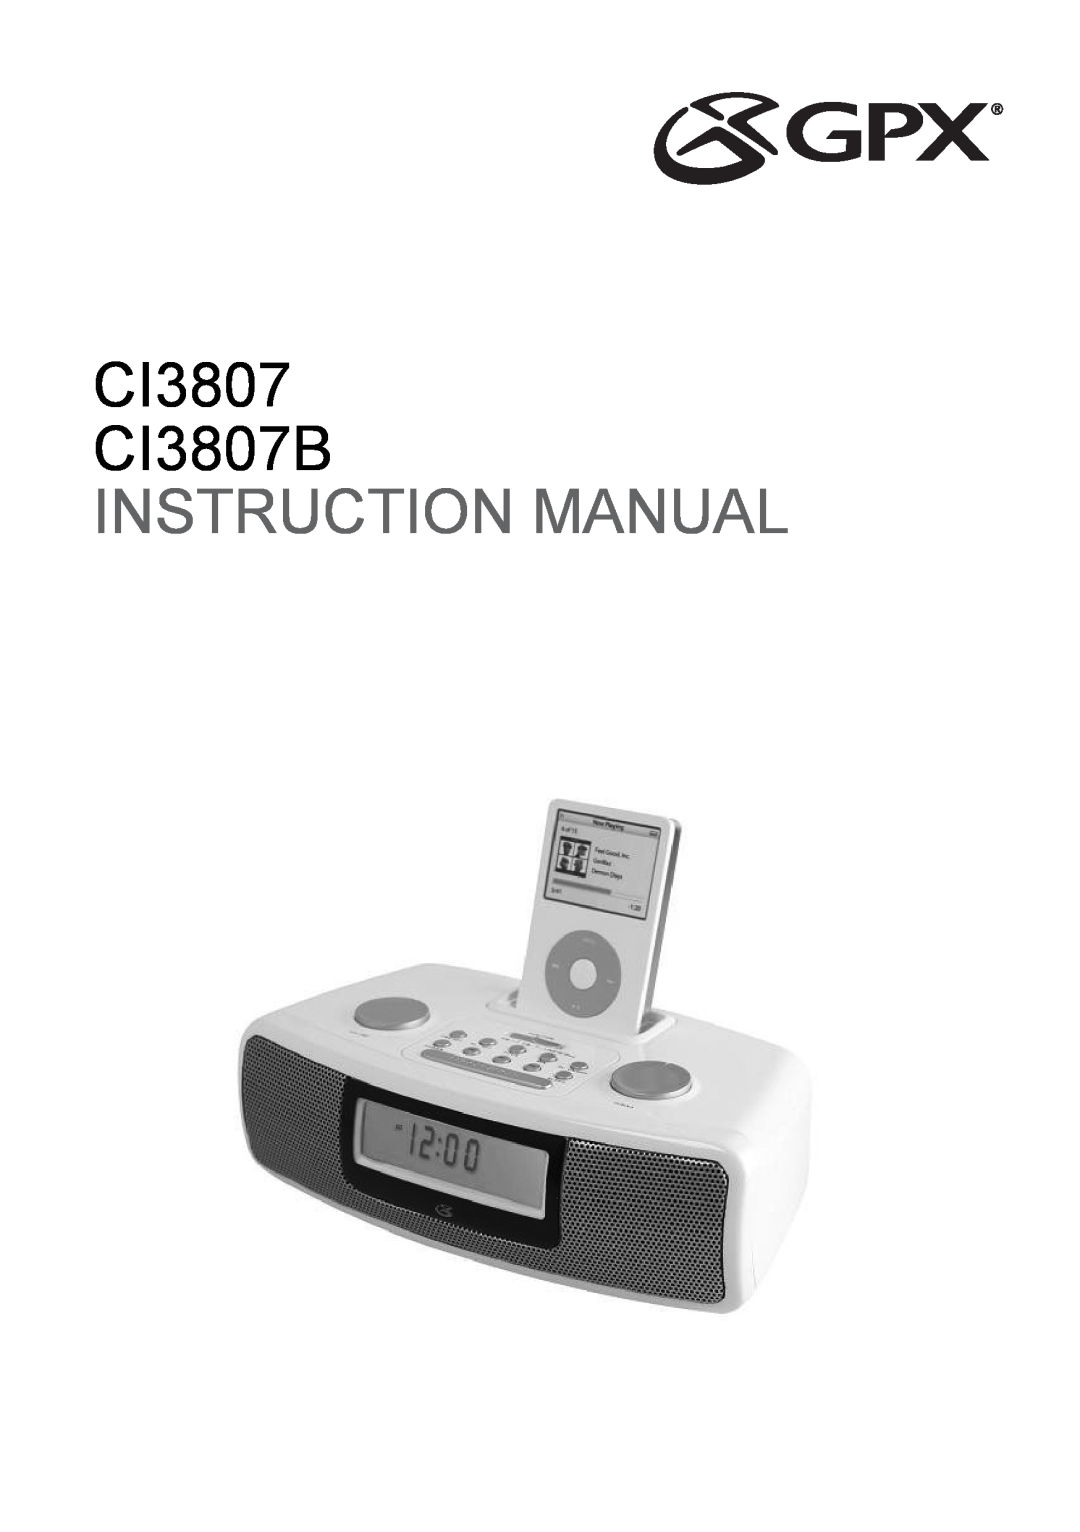 GPX ci3807b instruction manual CI3807 CI3807B, Instruction Manual 